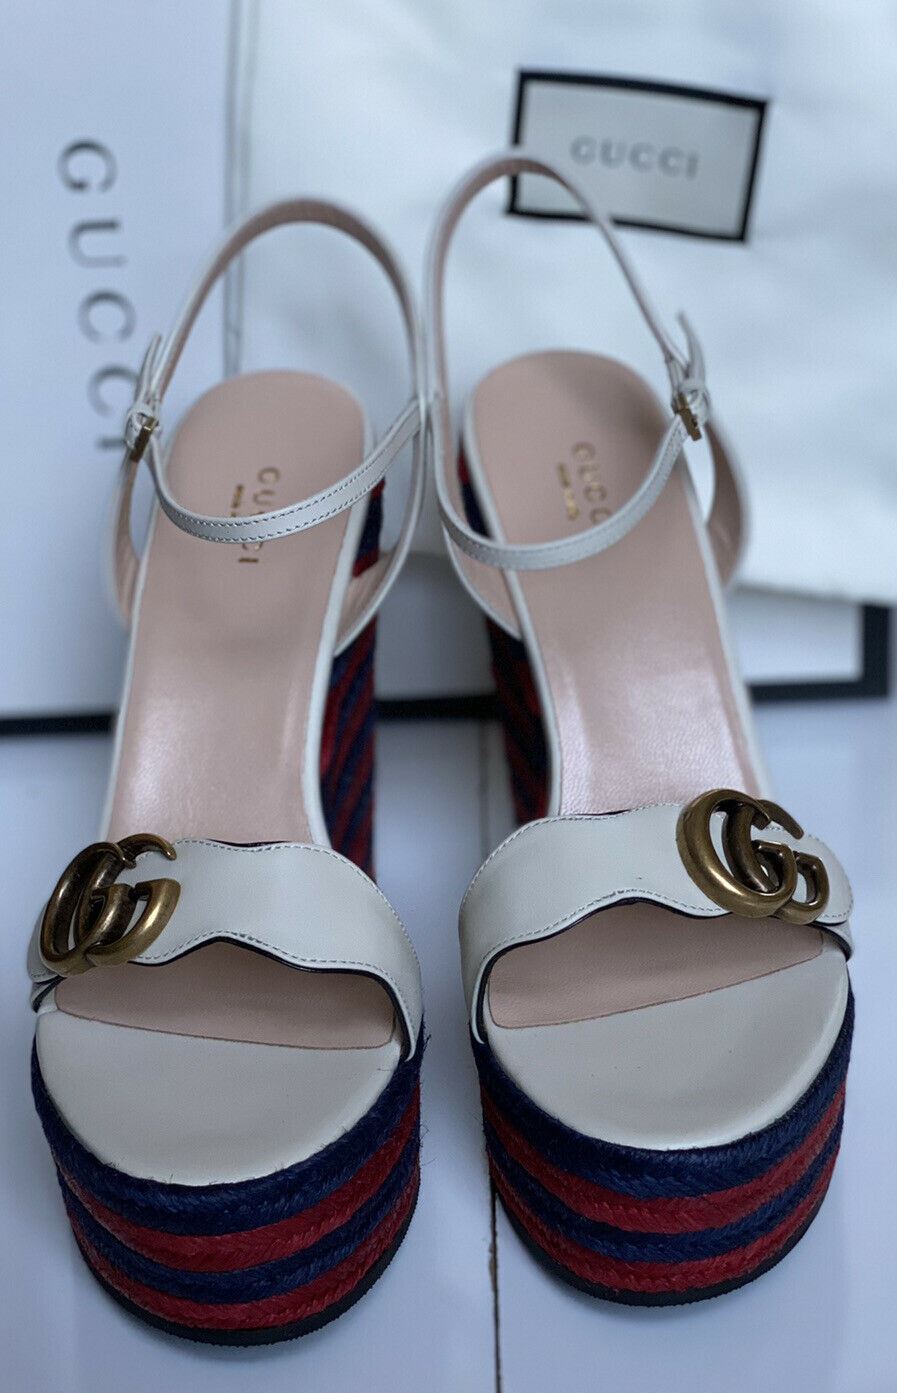 Женские сандалии NIB Gucci на платформе, эспадрильи Mystic, белые сандалии 10 США (40 ЕС) 624314 